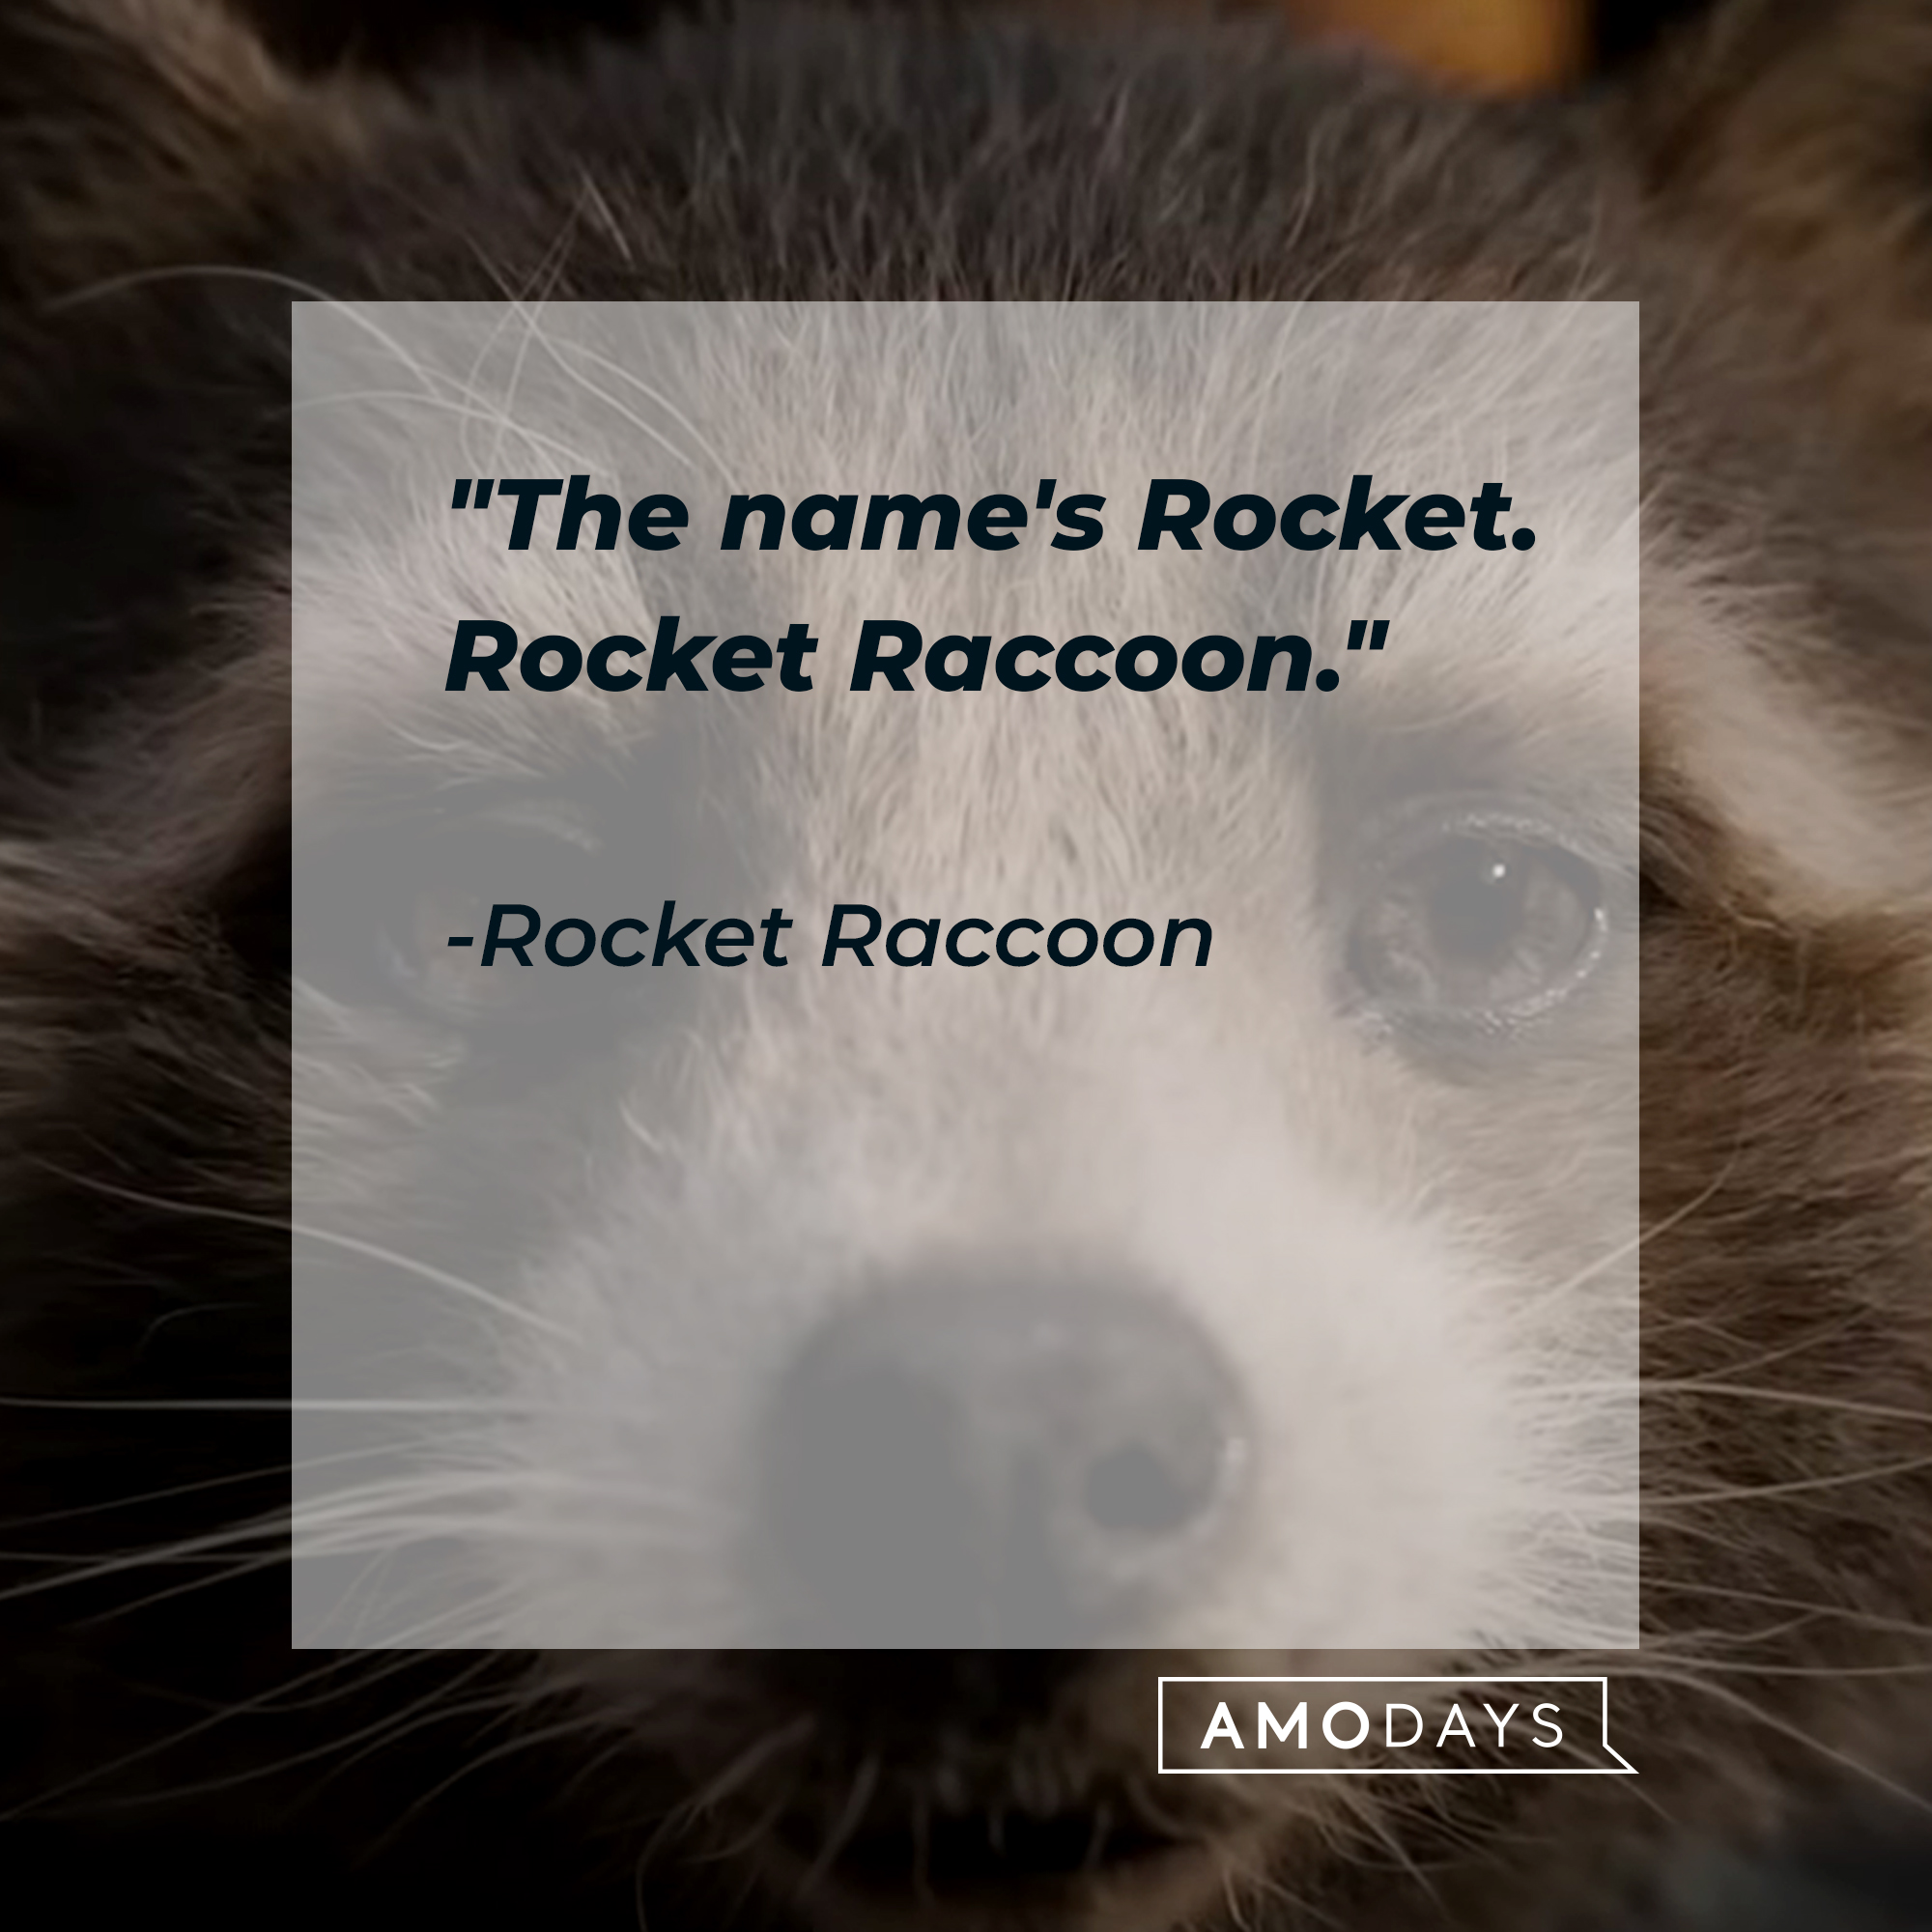 Rocket Raccoon's quote, "The name's Rocket. Rocket Raccoon." | Image: youtube.com/marvel